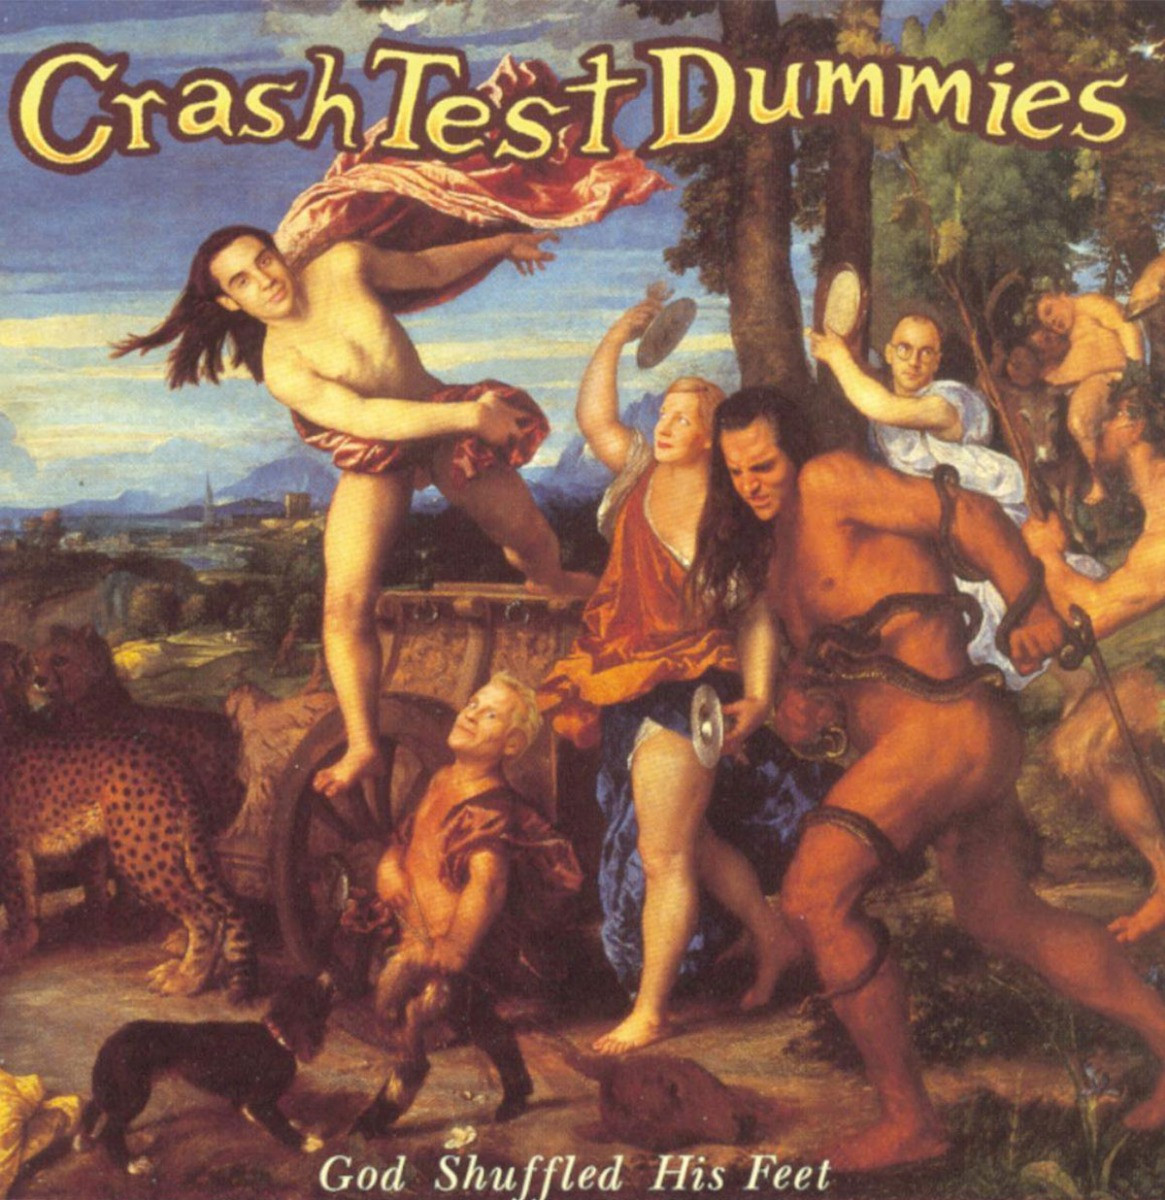 Crash Test Dummies - God Shuffled His Feet LP